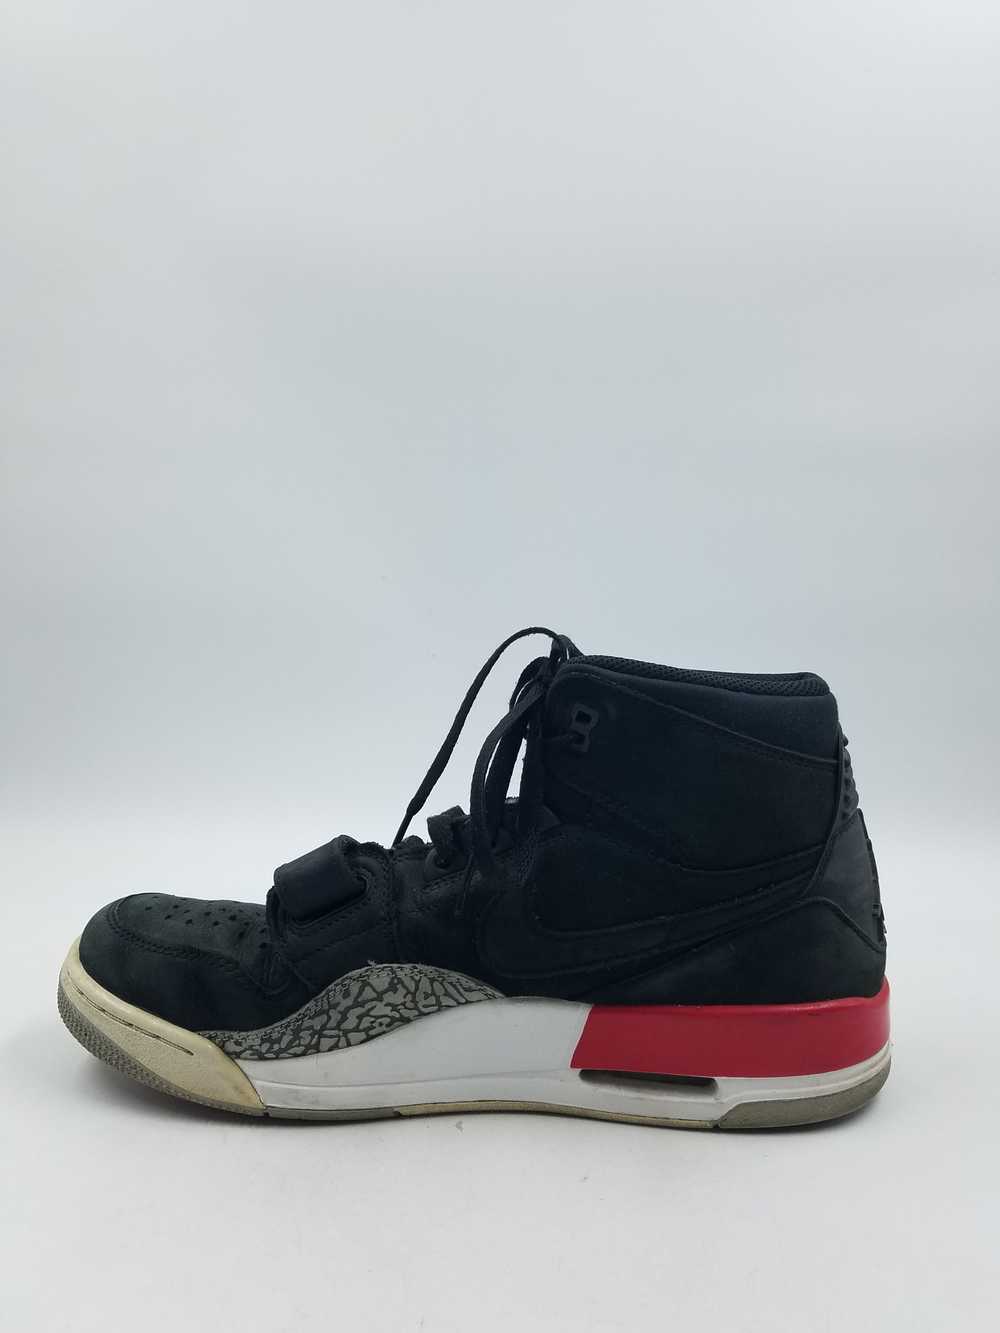 Nike Air Jordan Legacy 312 Black Suede Men's 11 - image 2